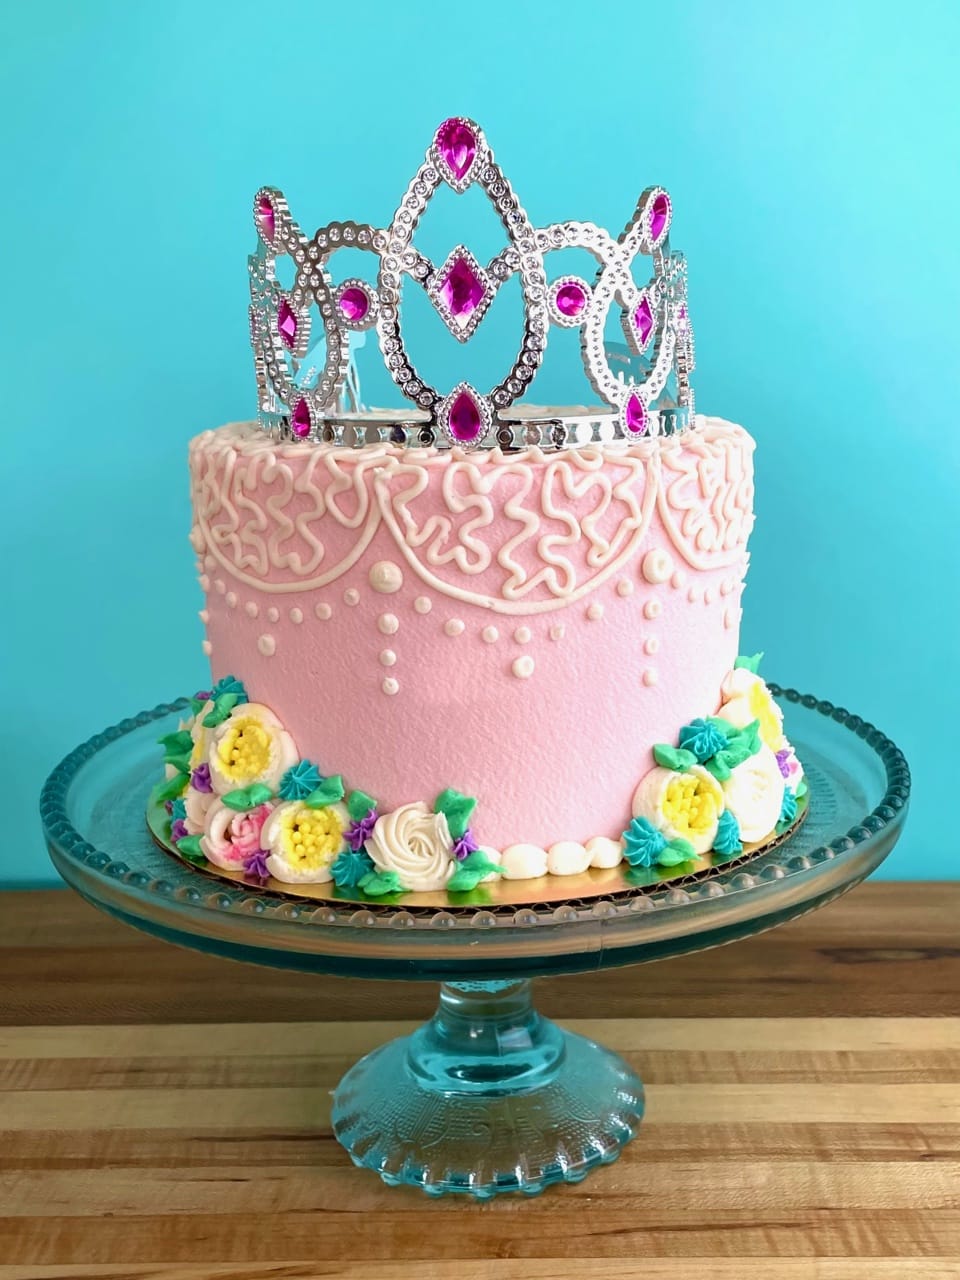 Buttercream Princess Flower Cake Design with a Tiara Cake Topper by Amycakes Bakes